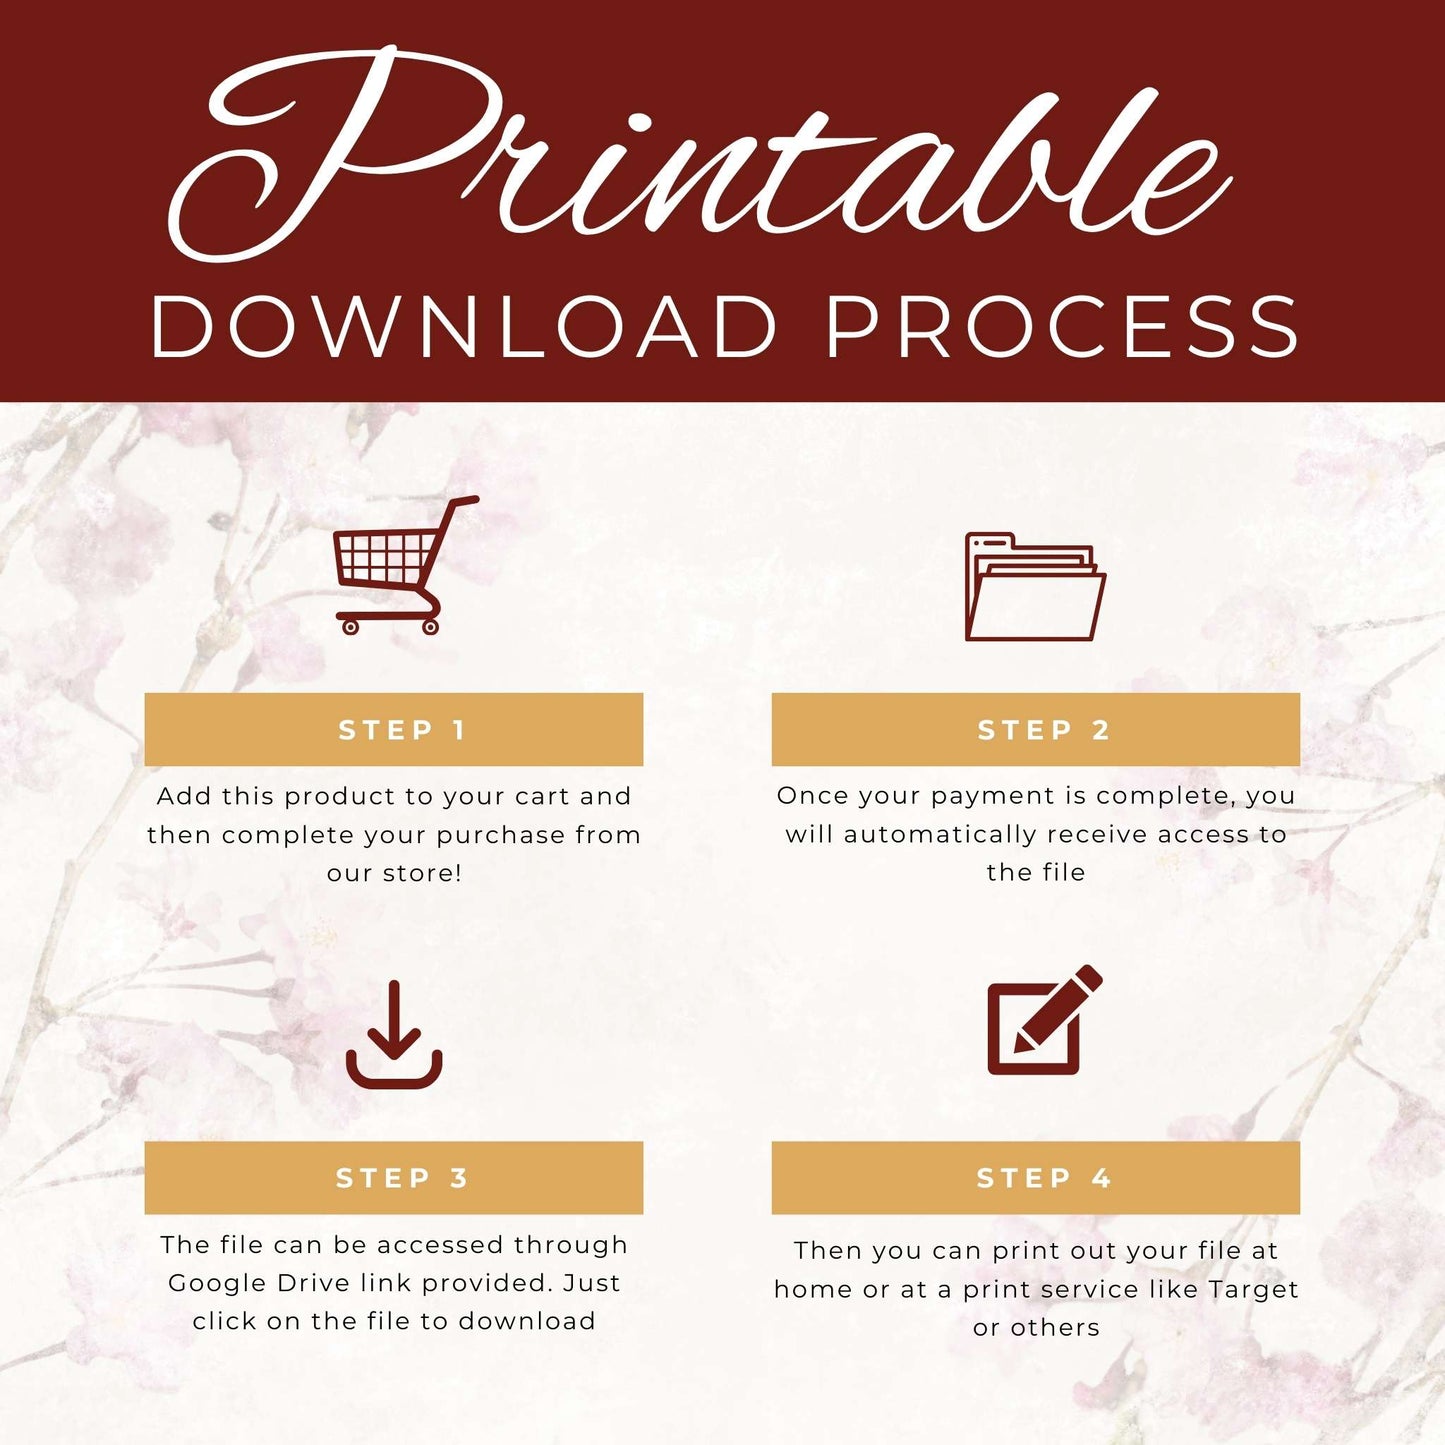 P.R.A.Y Prayer Guide | Digital Download - PDF #2 | Pastel Collection